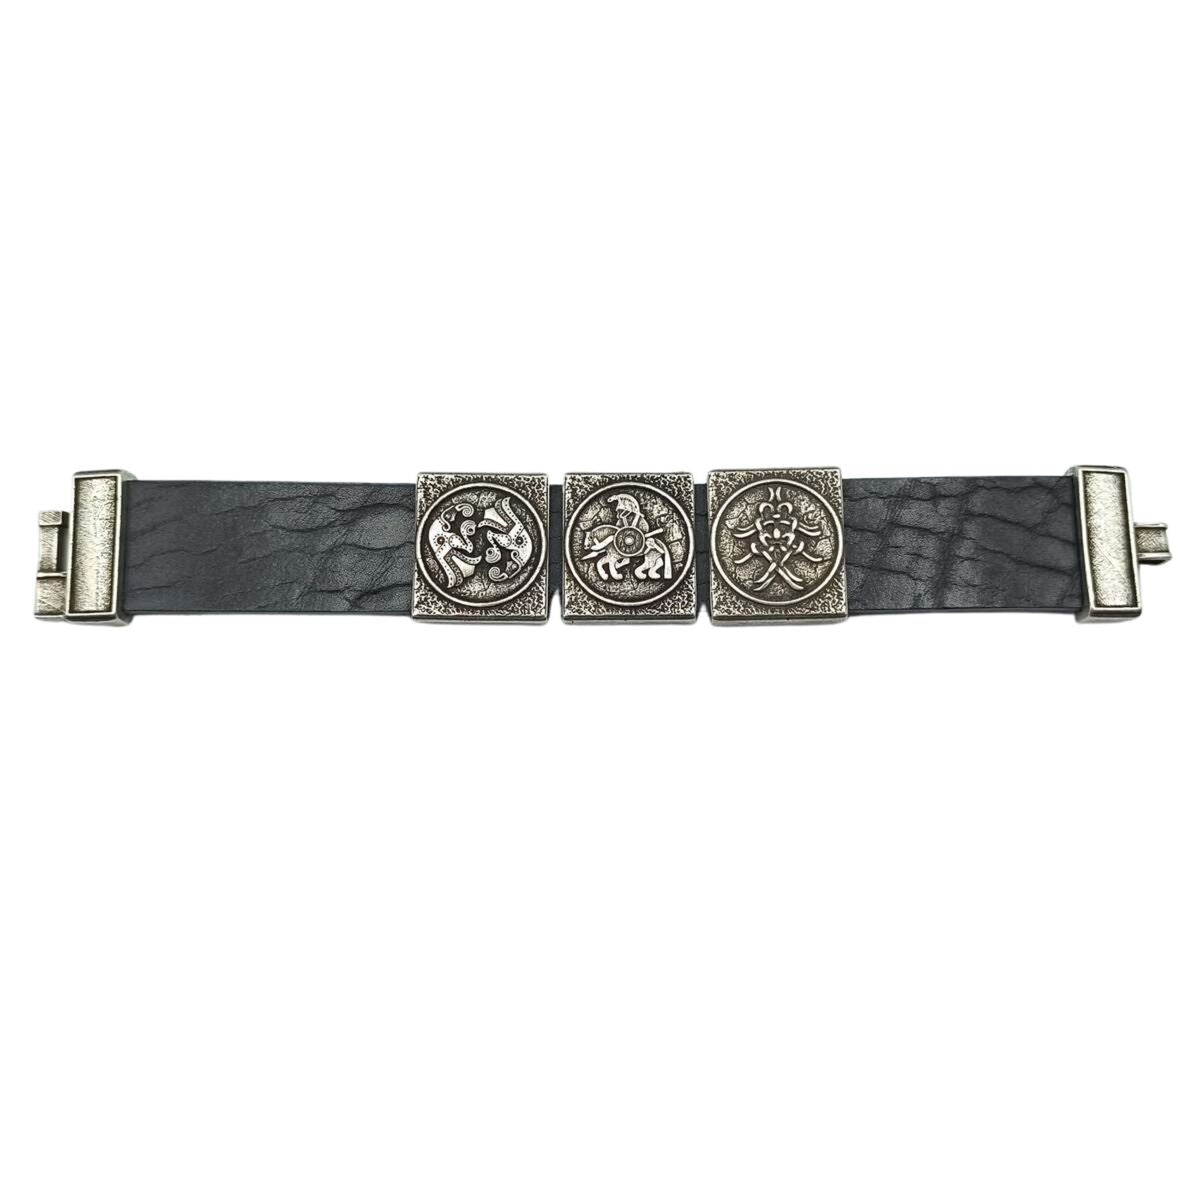 Odin leather wrist cuff bracelet   